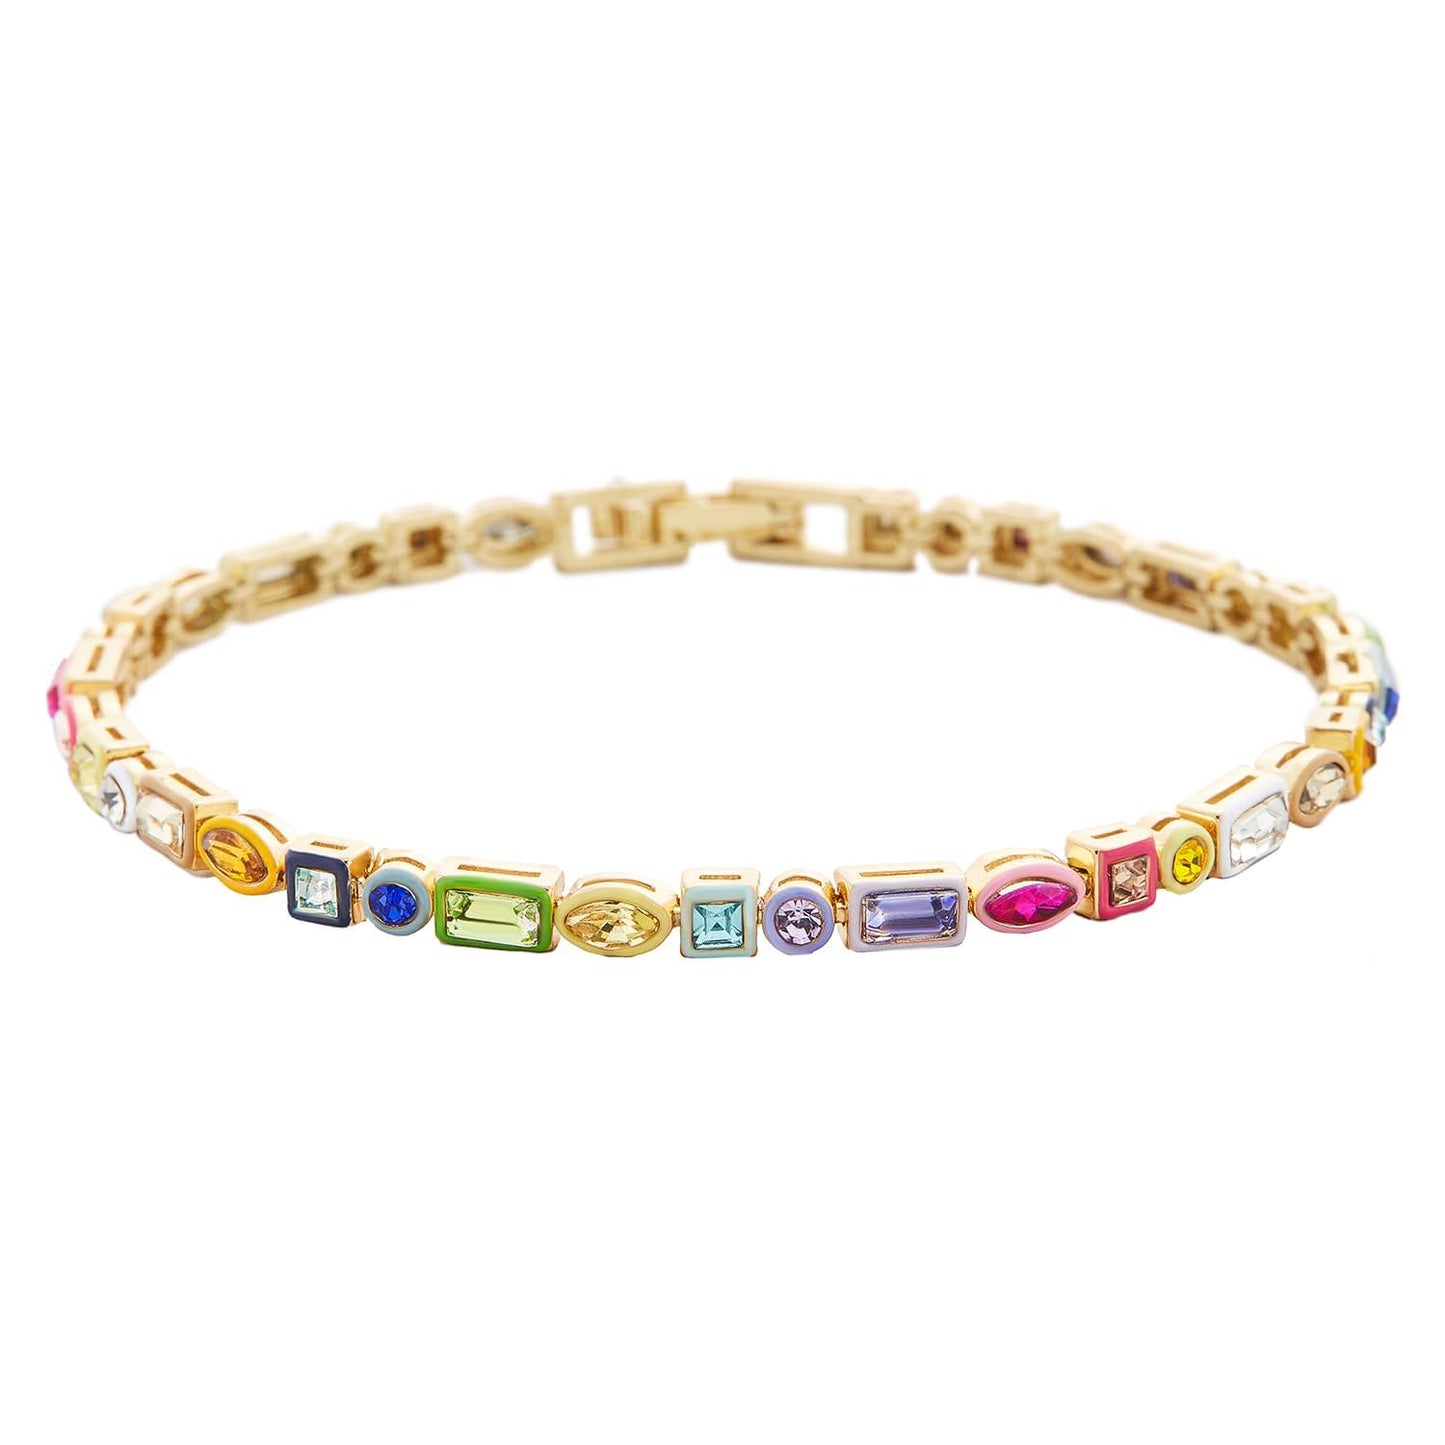 BaubleBar Kayden Gold Bracelet for Women - Trendy, Chic, Mixed-Shape, Hypoallergenic Gold Plated Brass Tennis Bracelet Embellished with Cubic Zirconia Stones, Stacking Bracelet, Rainbow, 7.15"